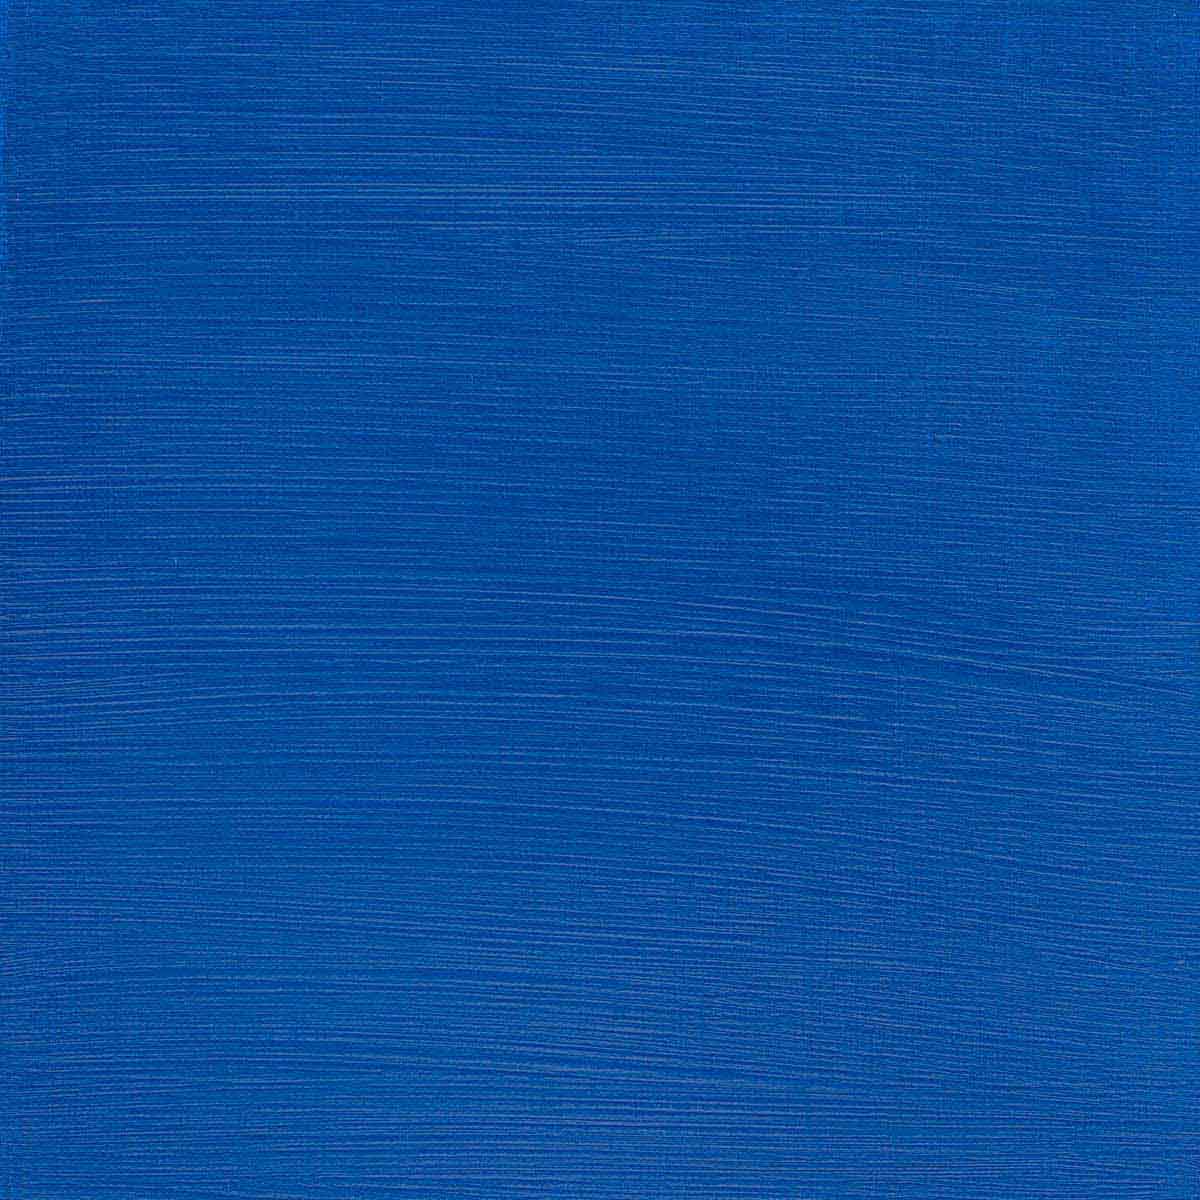 Winsor and Newton - Professional Artists' Acrylic Colour - 60ml - Cerulean Blue Chromium